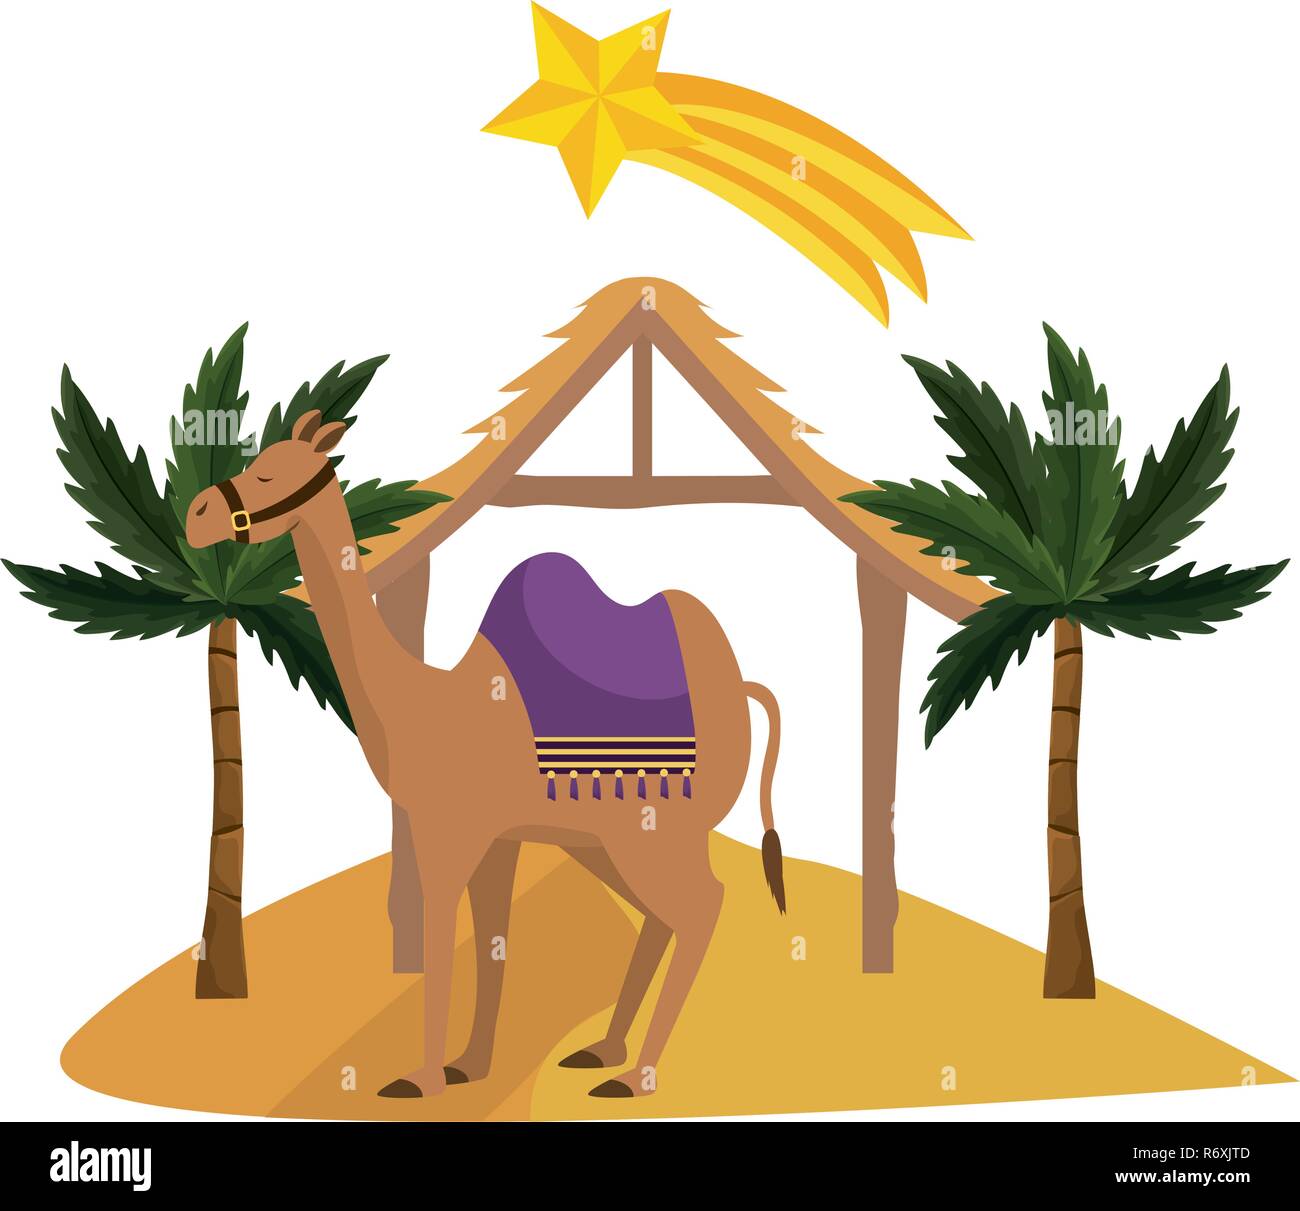 Church nativity bethlehem Stock Vector Images - Alamy